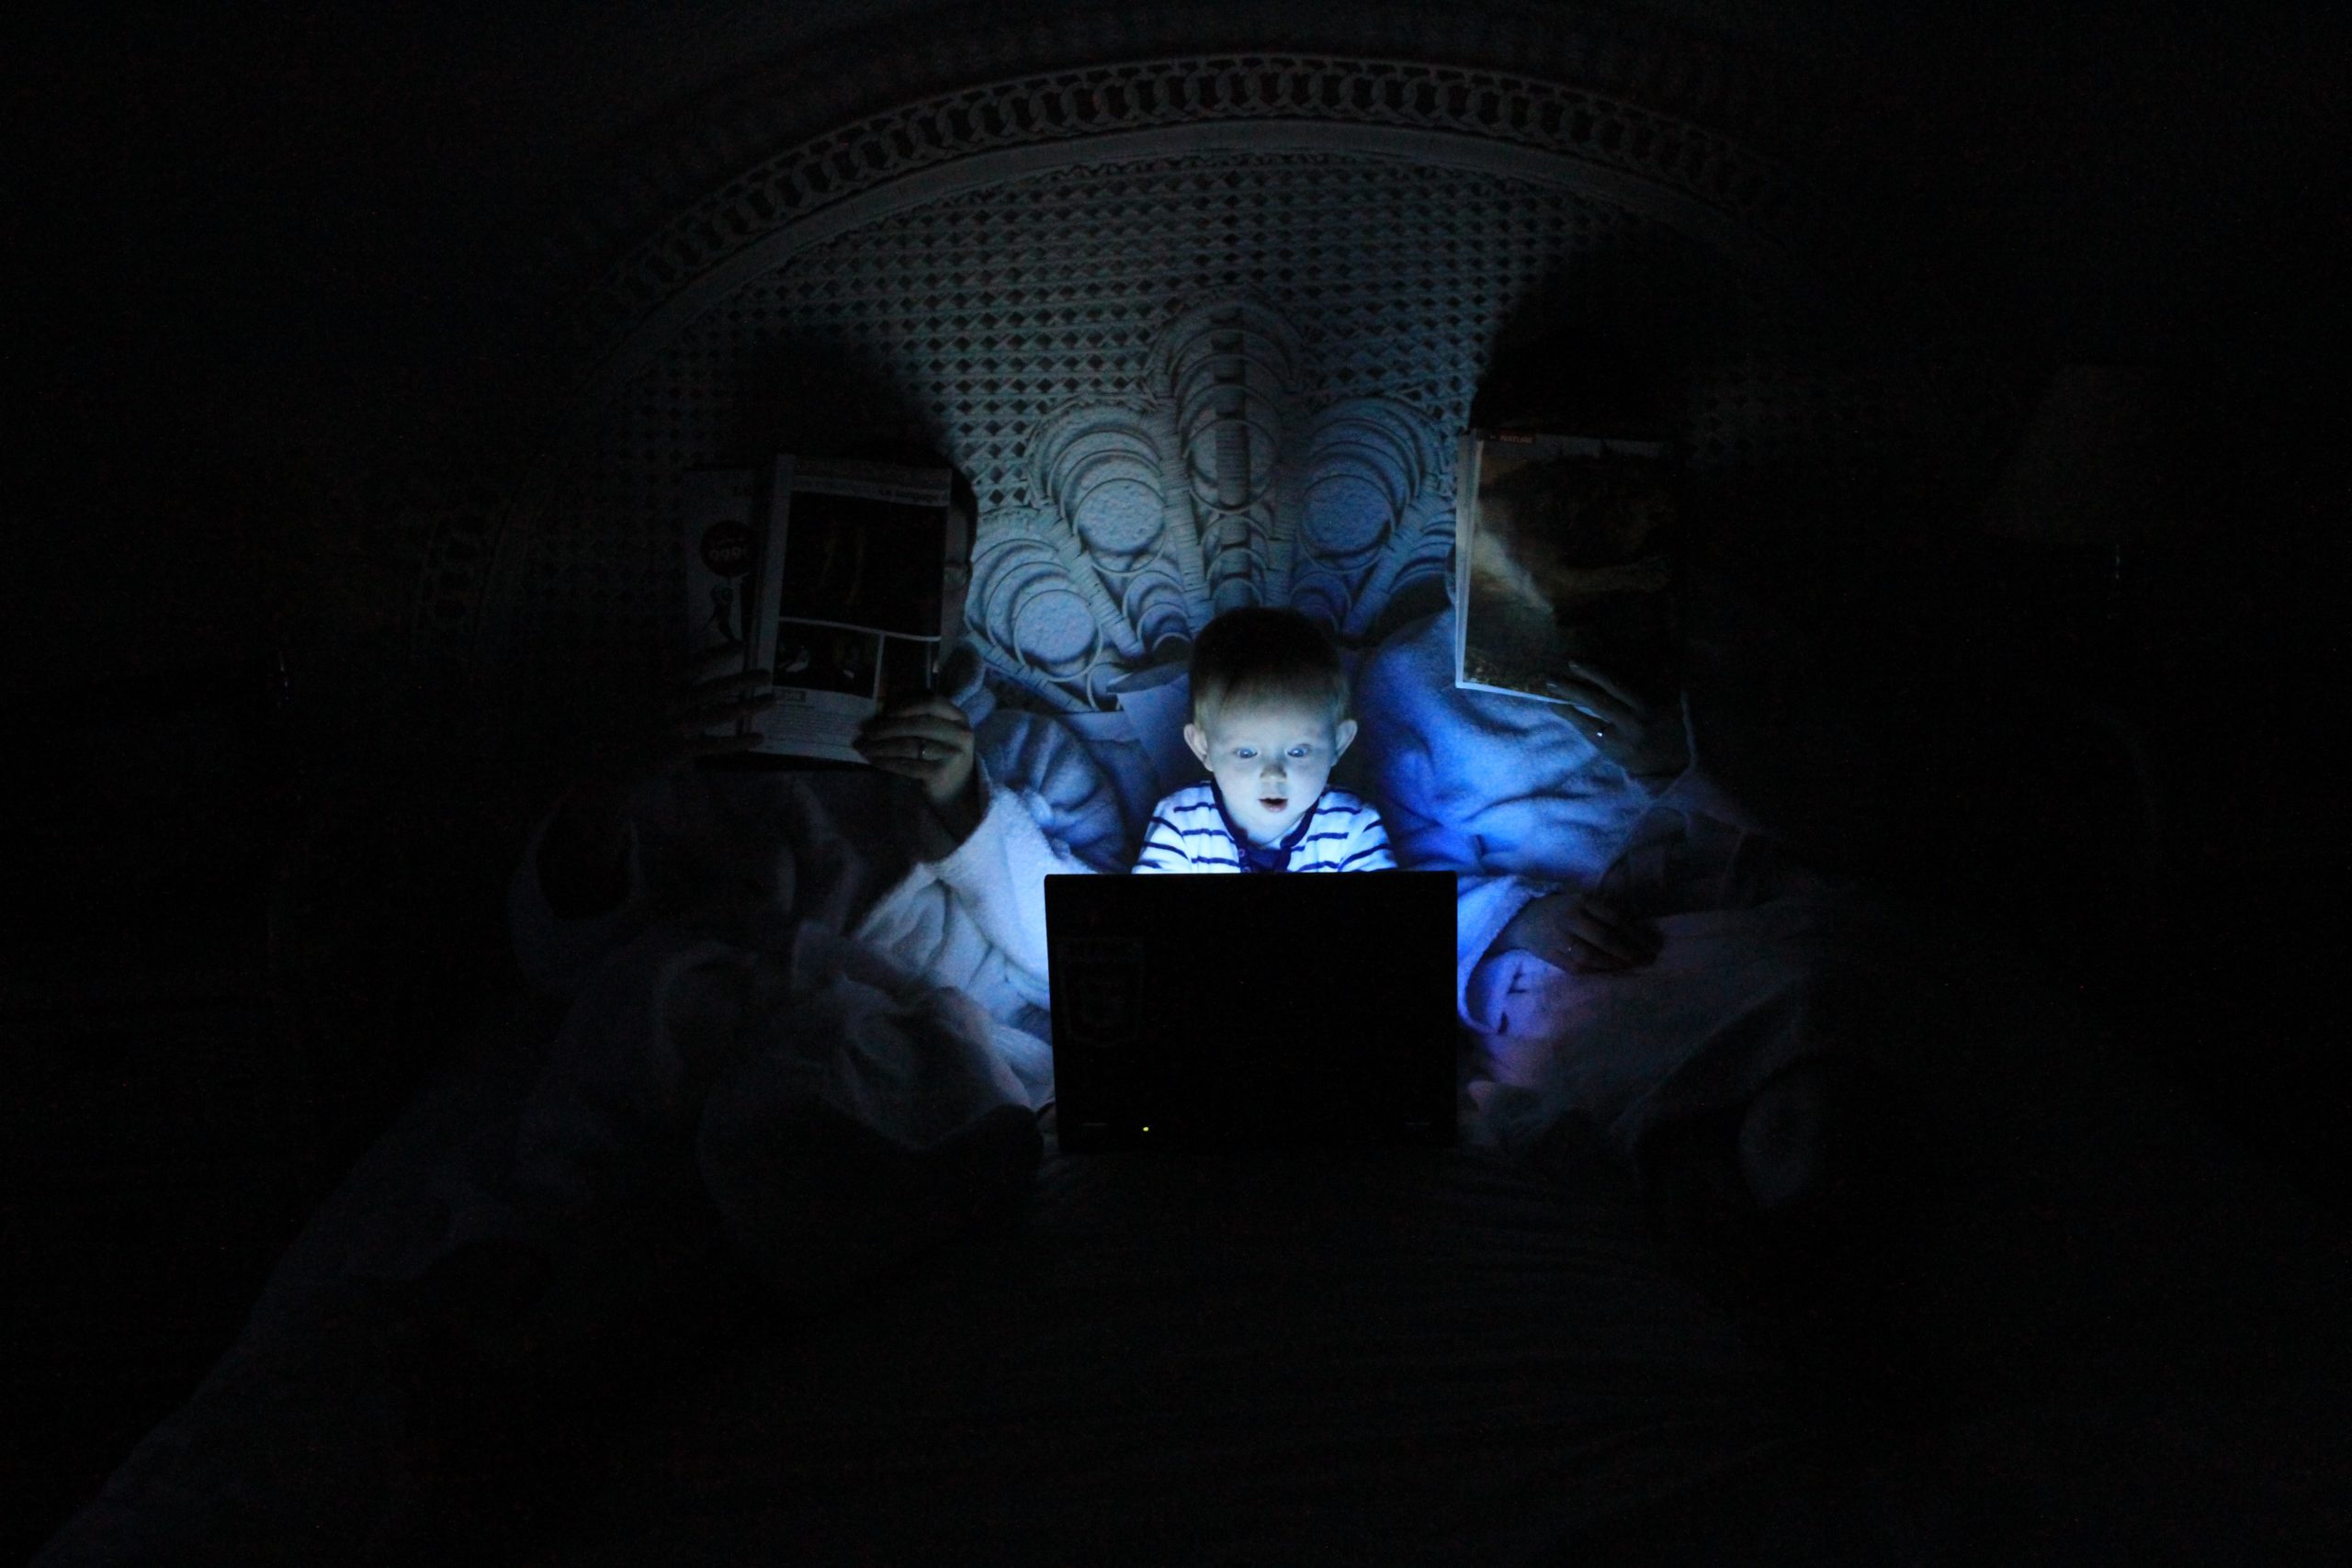 teen watching laptop screen late at night